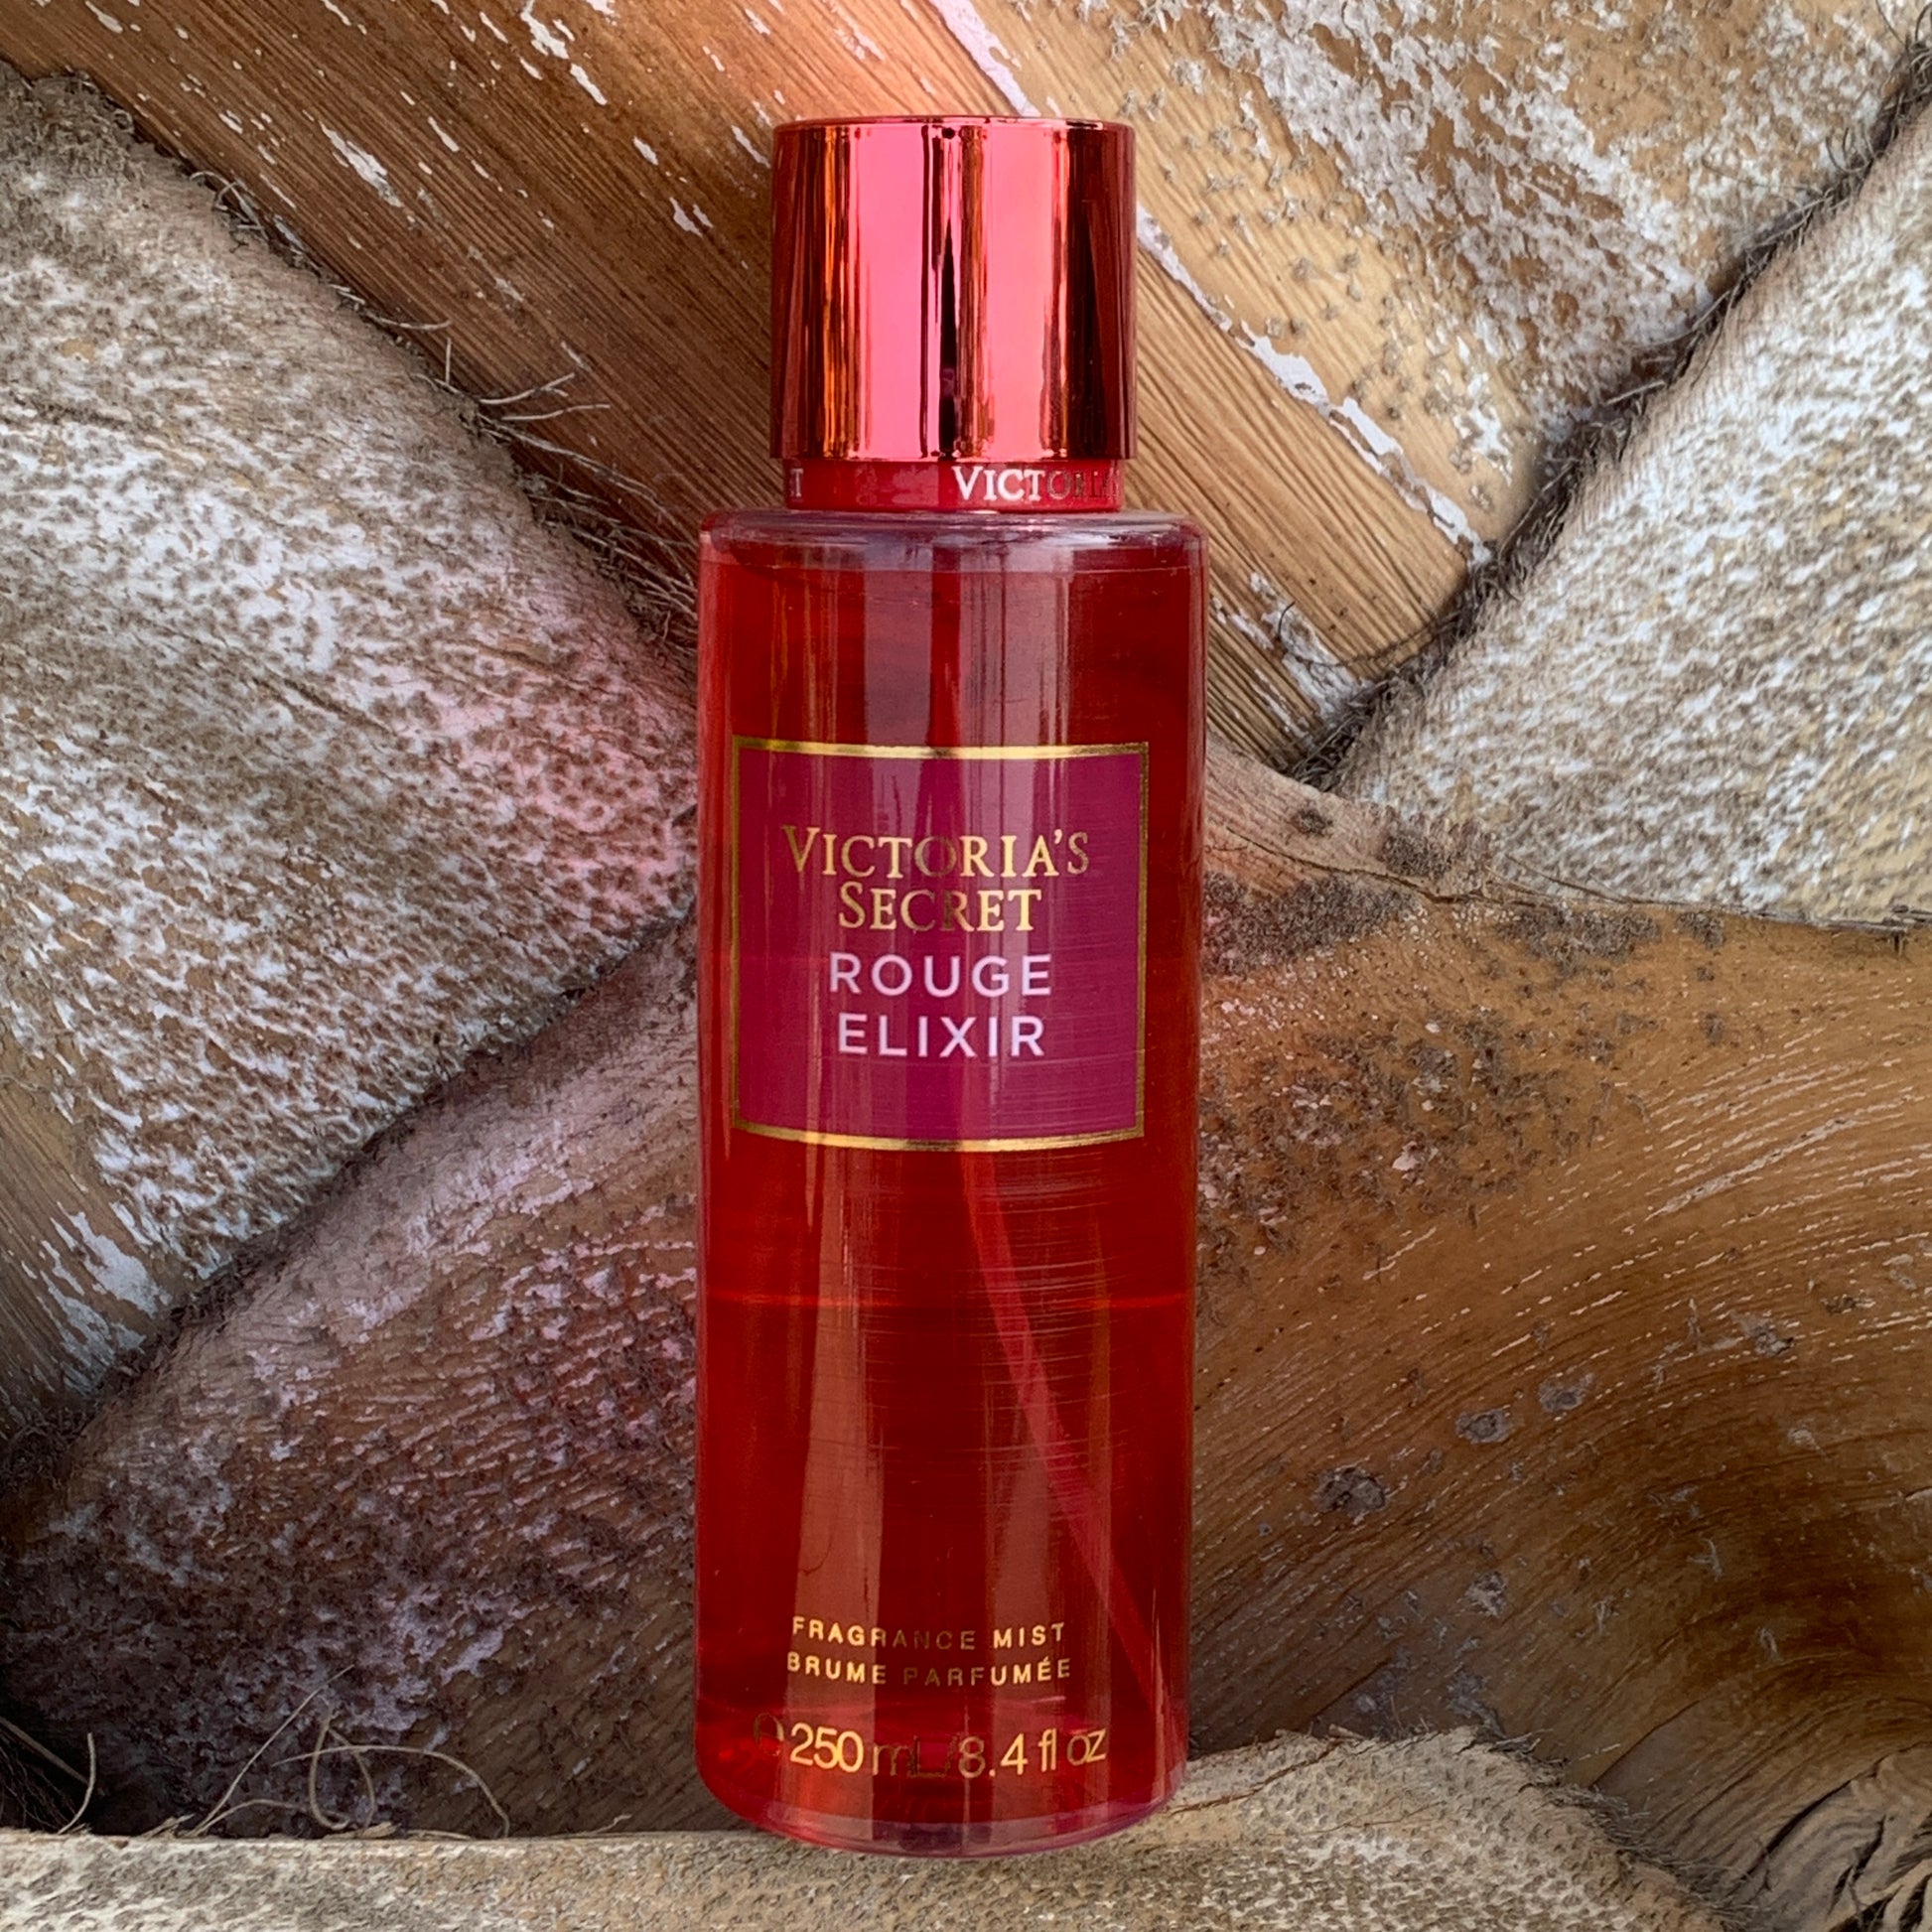  Victoria's Secret Rouge Elixir NO.02 Fragrance Body